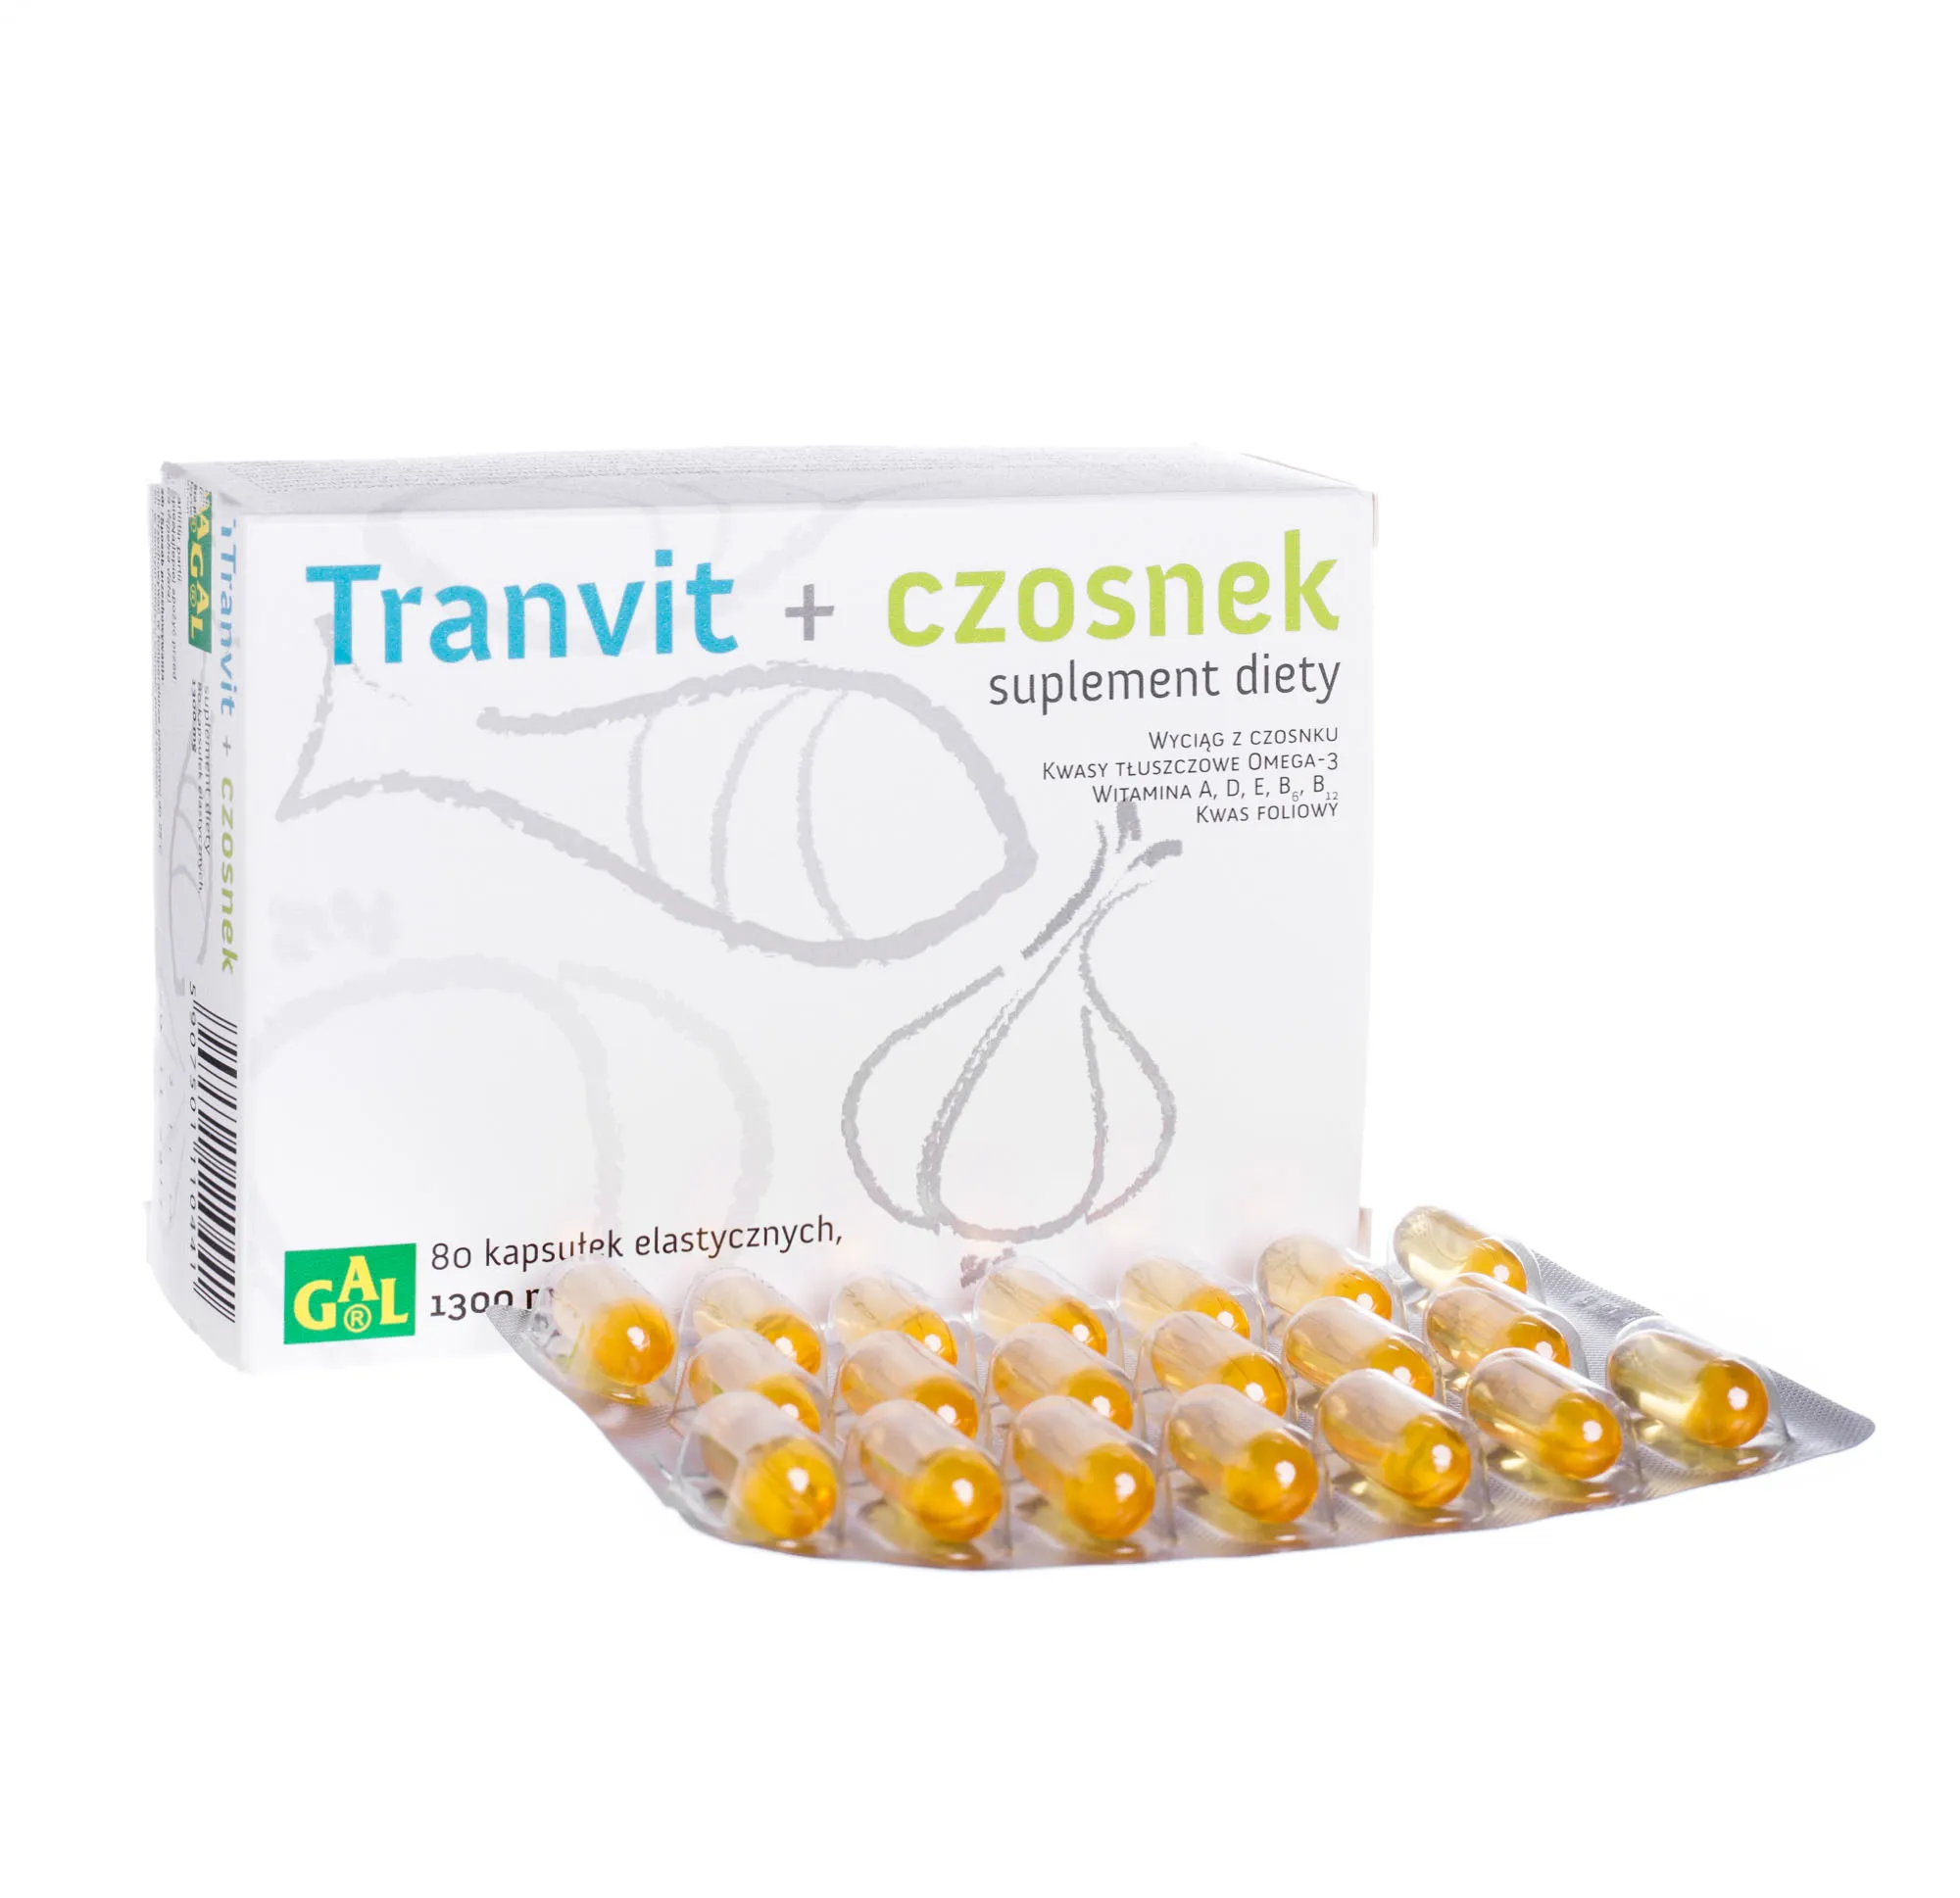 Tranvit + czosnek. 80 kapsułek elastycznych, 1300 mg 